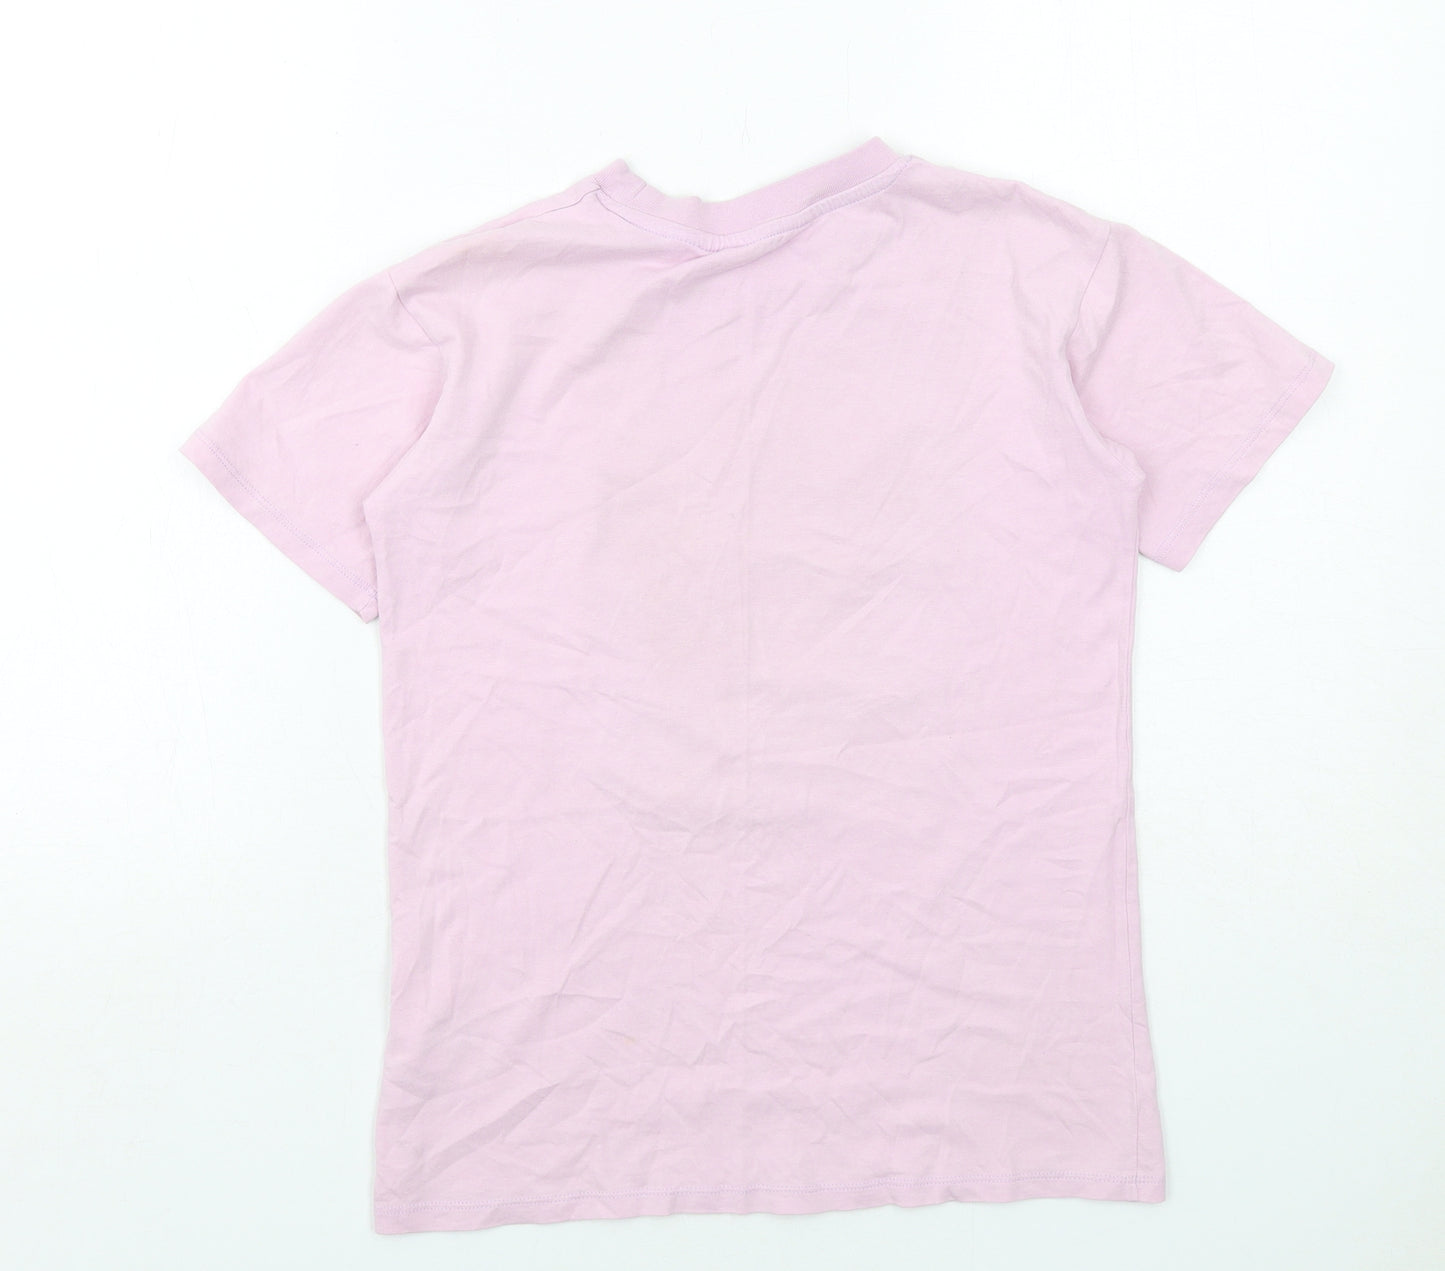 H&M Girls Pink Cotton Basic T-Shirt Size 9-10 Years Round Neck Pullover - Ursula